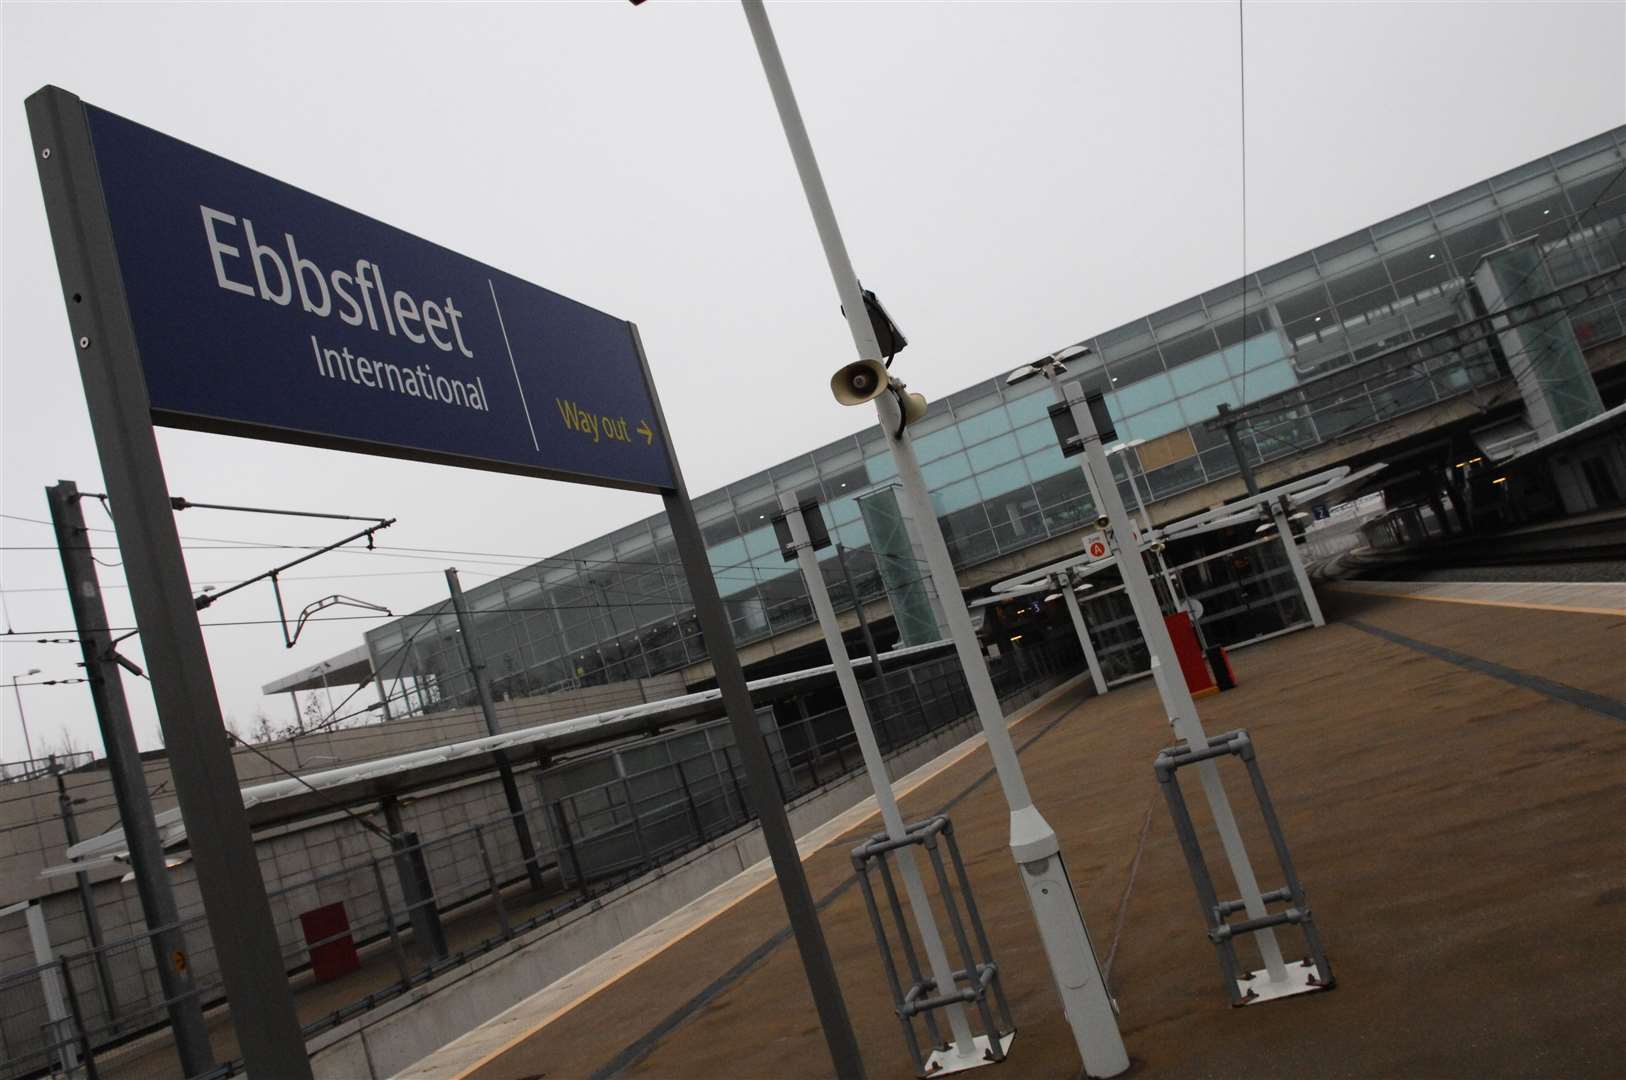 Stock Images of Ebbsfleet international train station Picture: Nick Johnson (2726787)